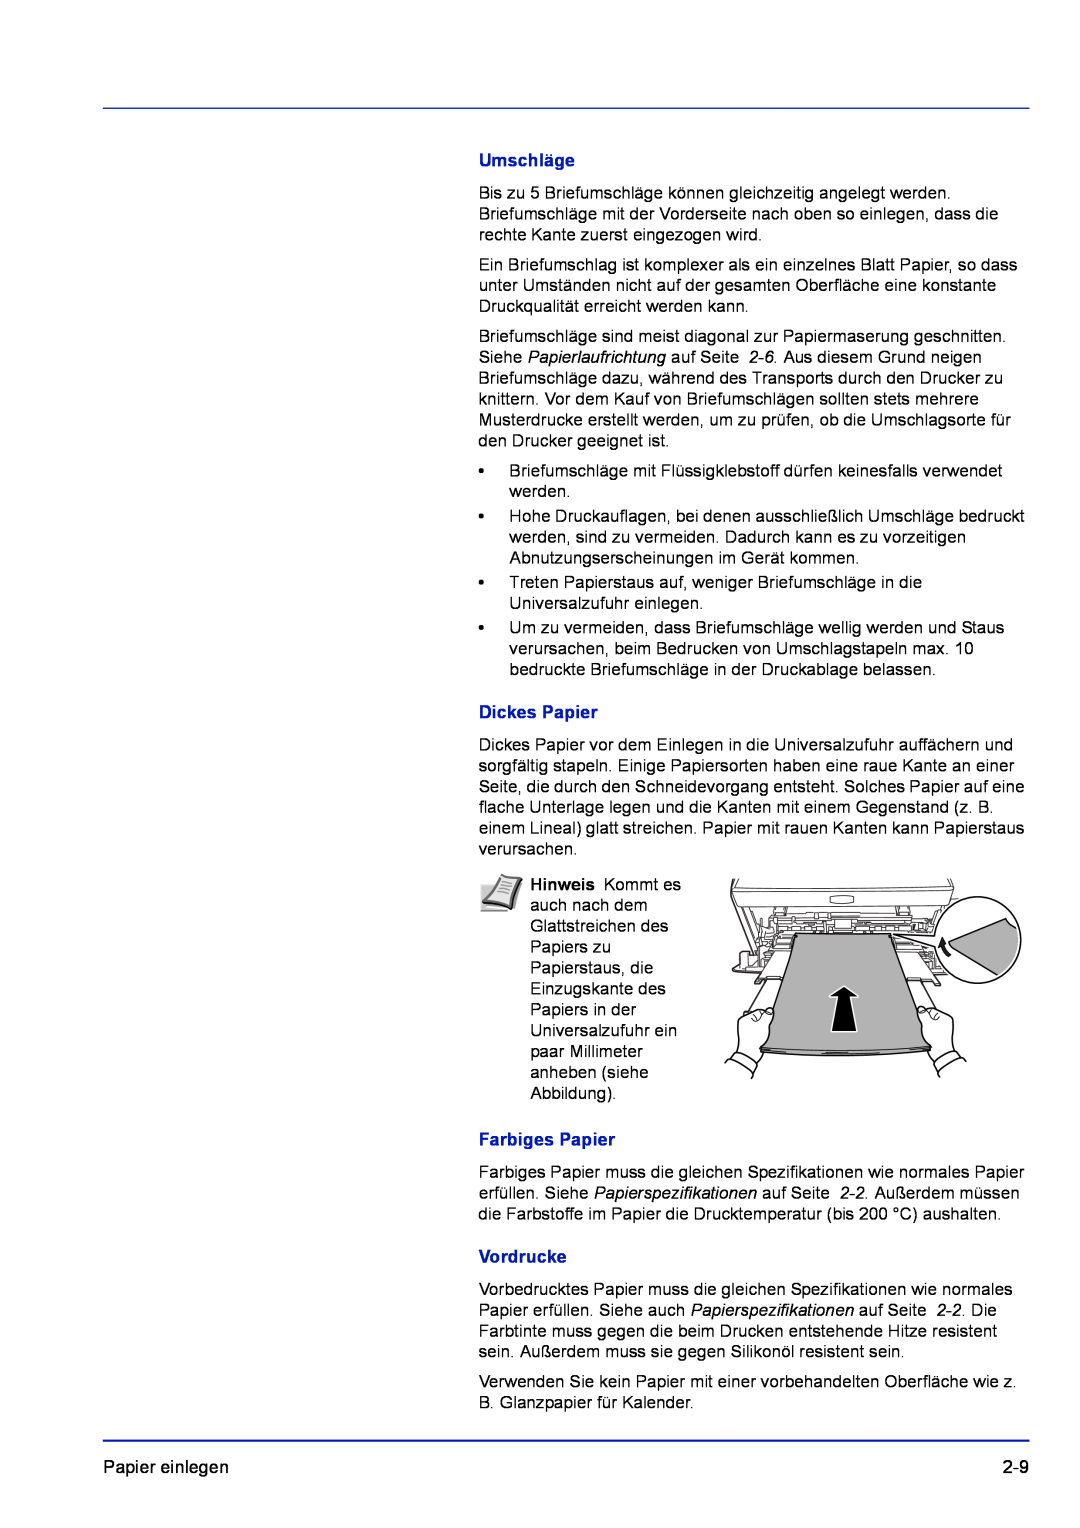 Kyocera FS-1320D, FS-1120D manual Umschläge, Dickes Papier, Farbiges Papier, Vordrucke 